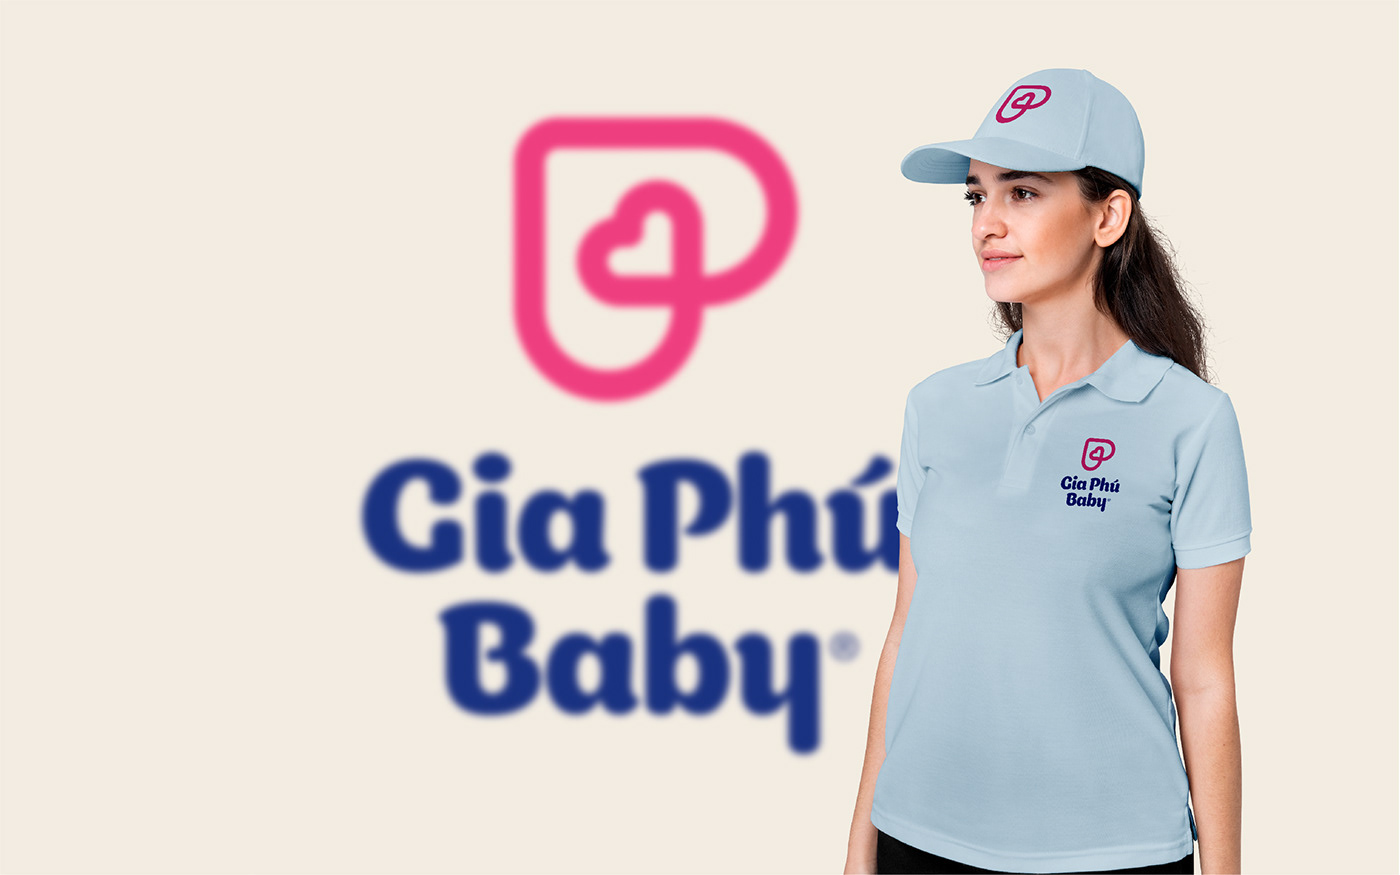 baby mart plaza logo brand vietnam kid